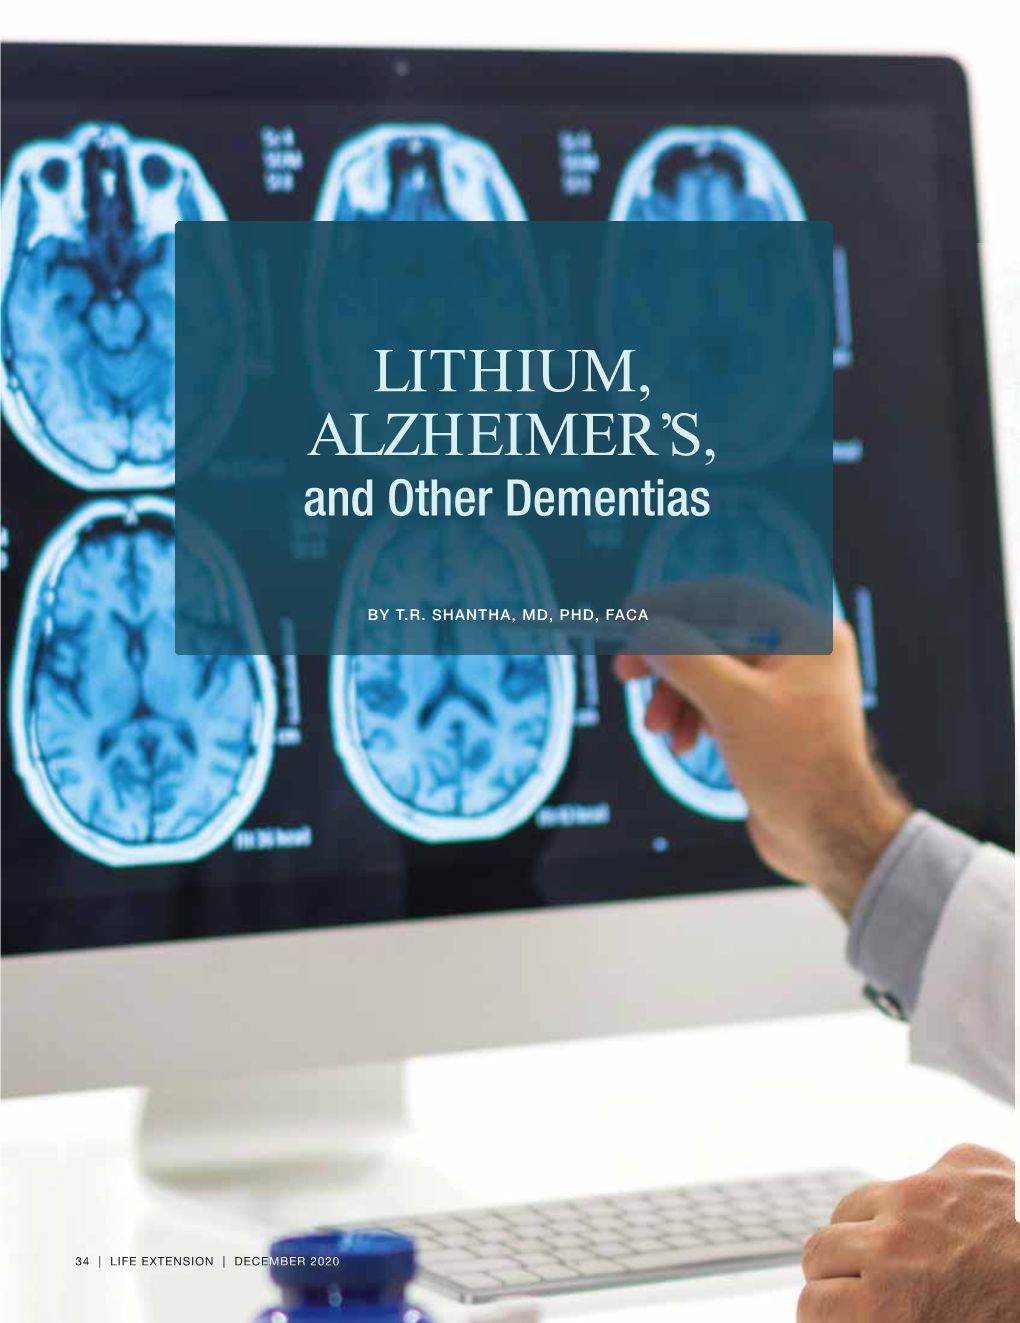 LITHIUM, ALZHEIMER's, and Other Dementias